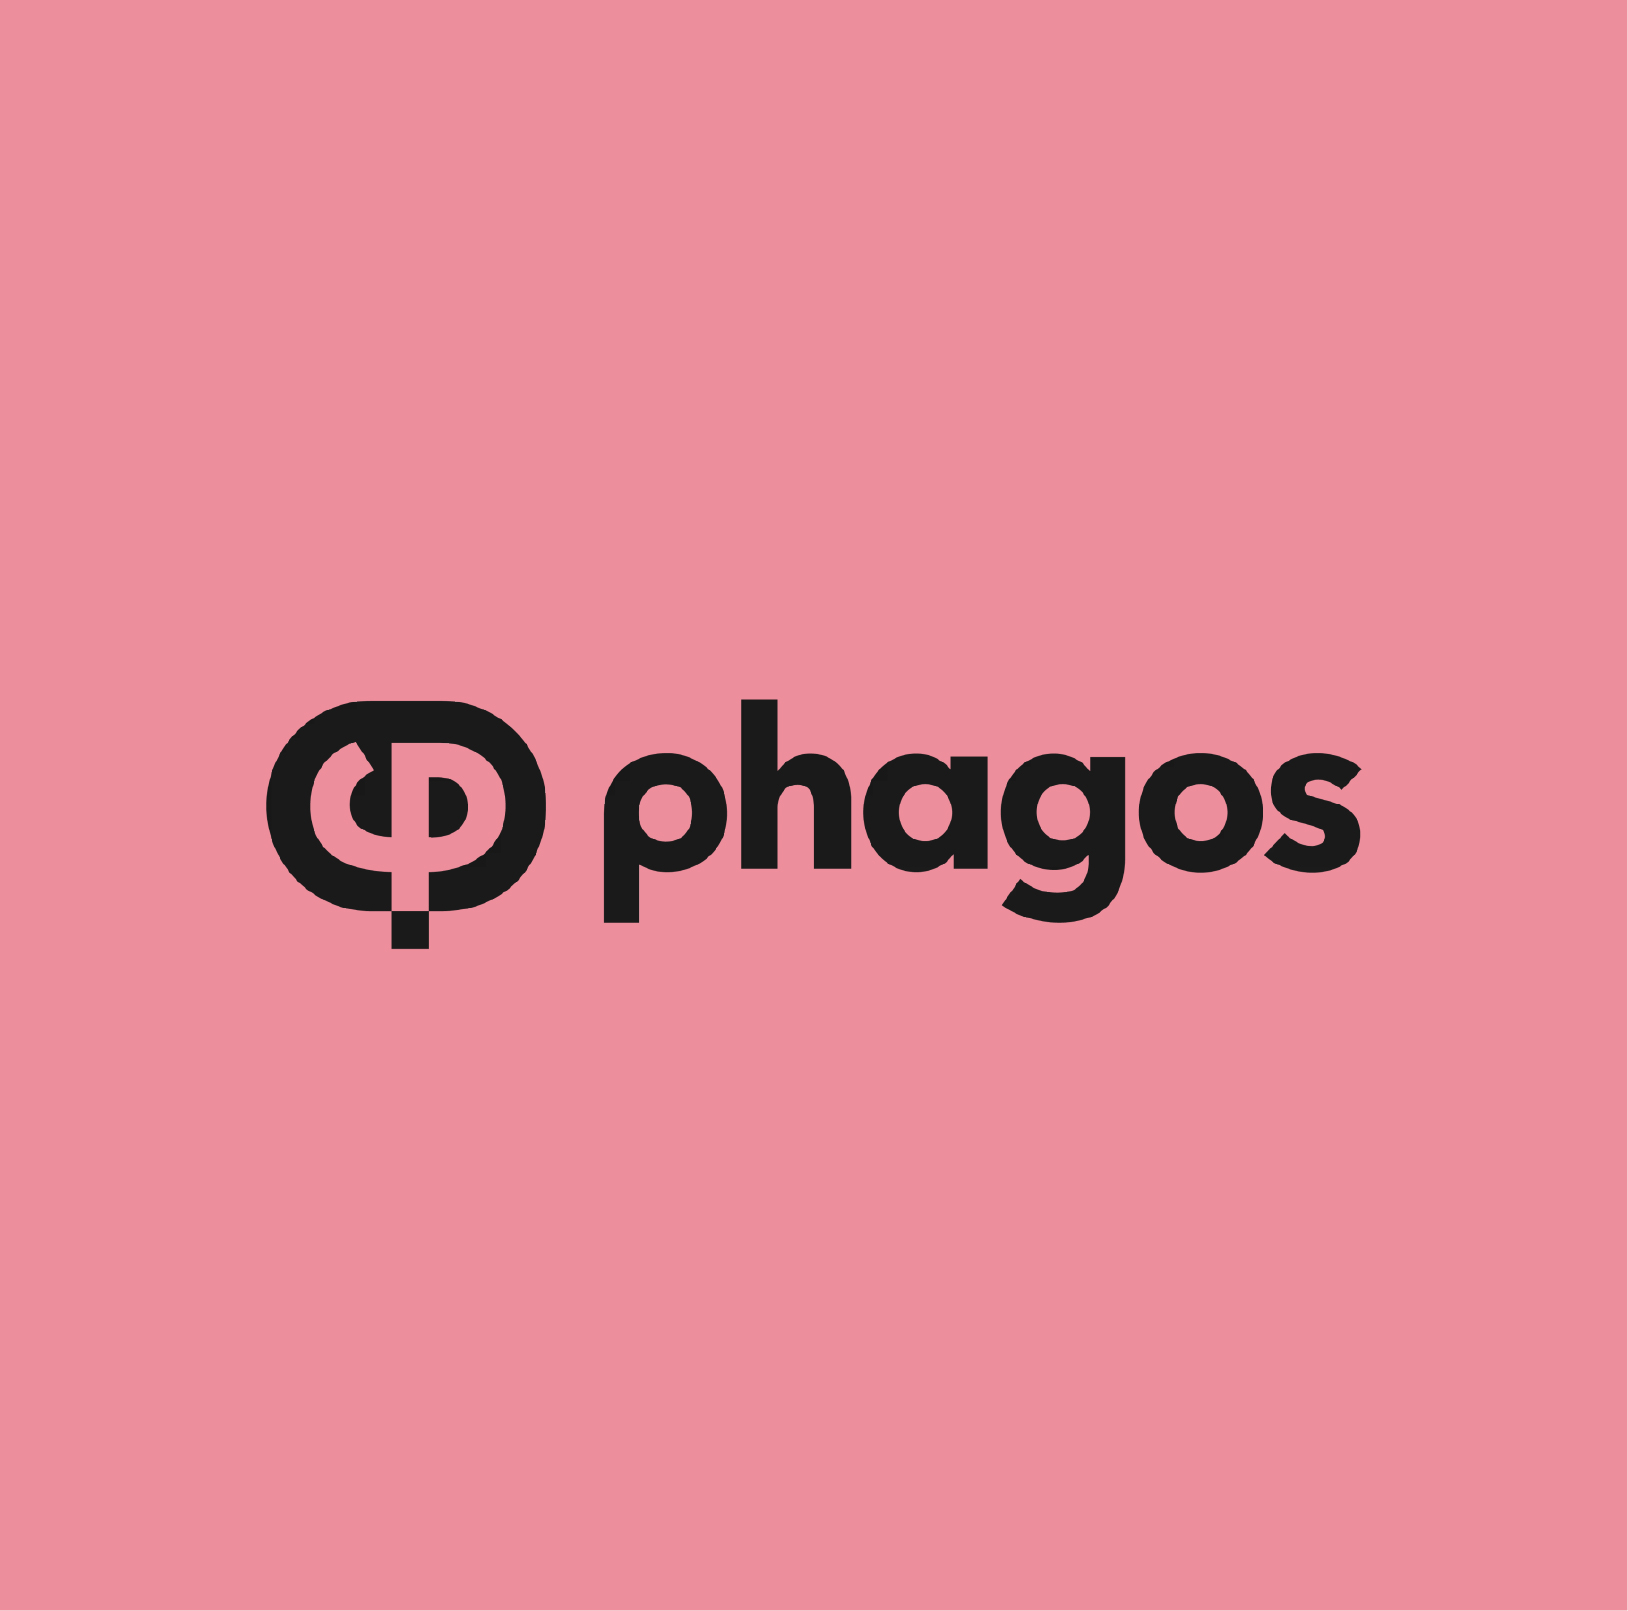 Phagos